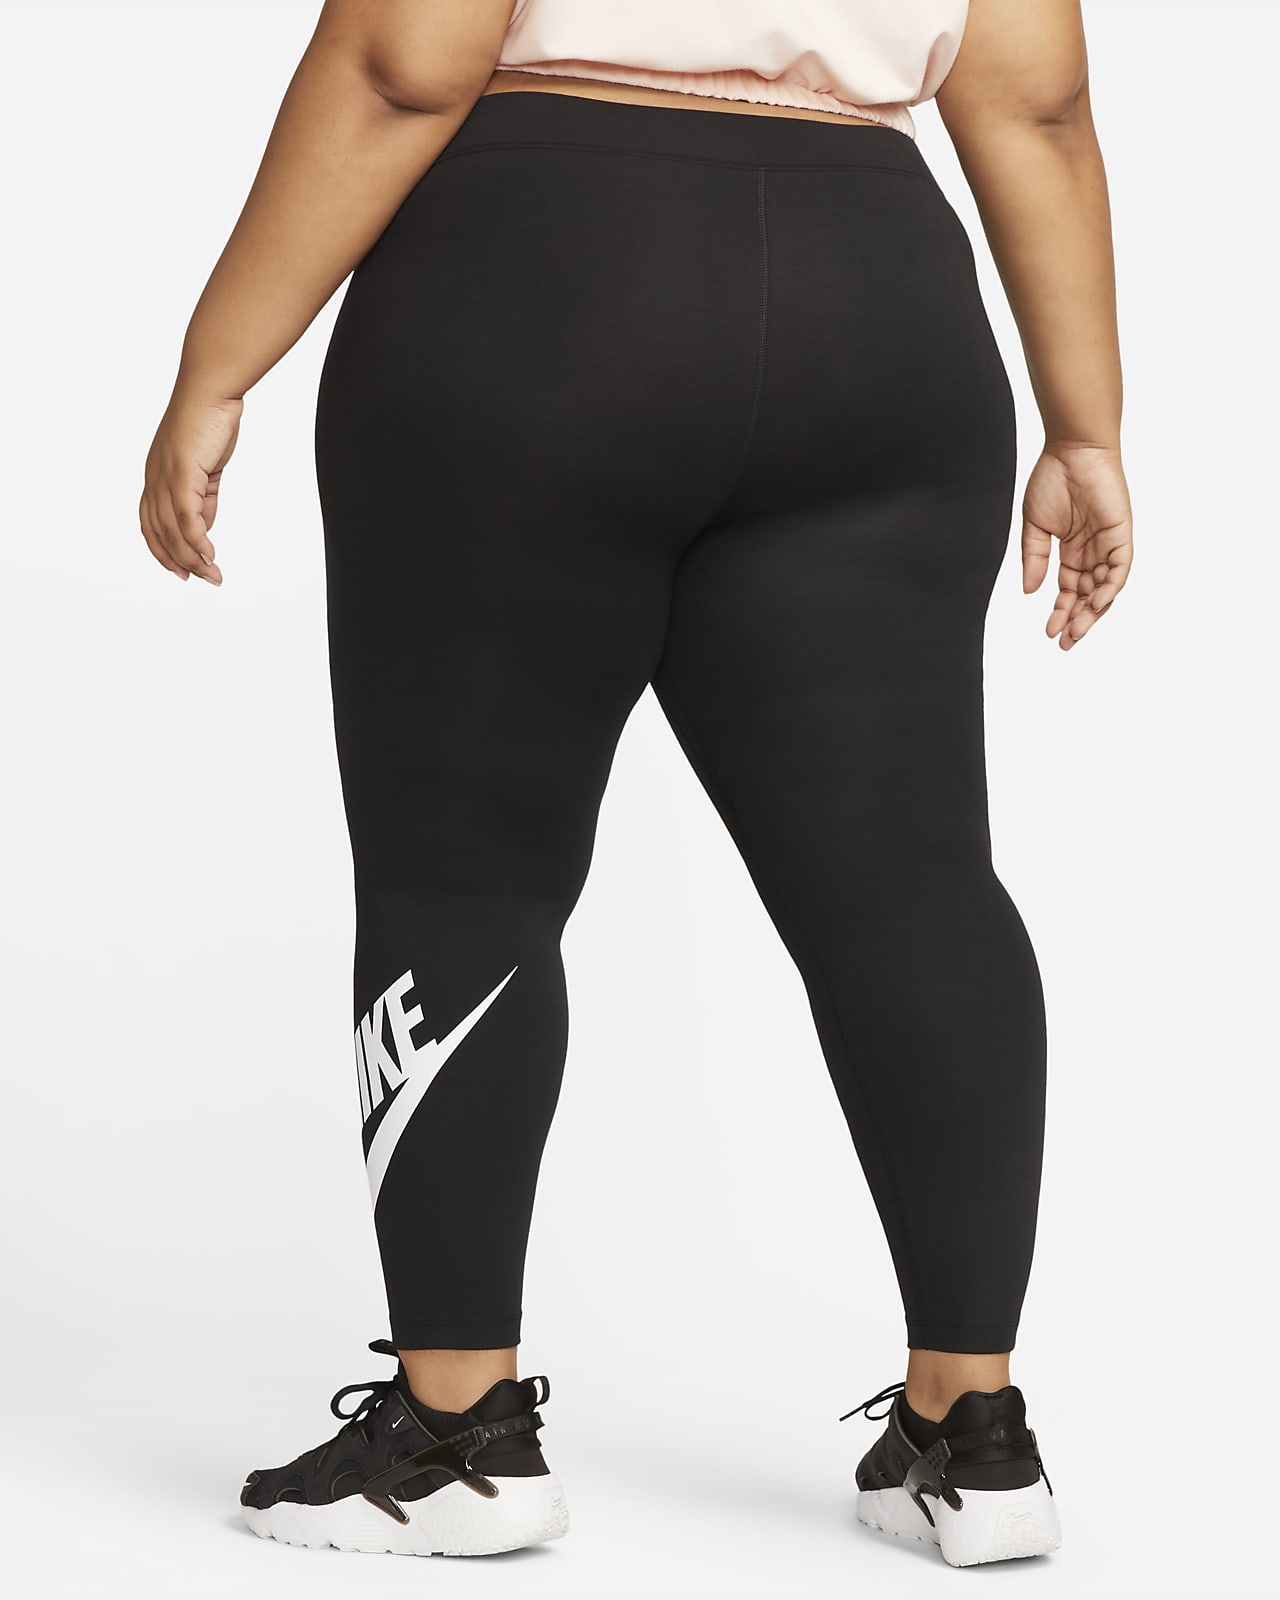 Nike leggings sz Small for women, Women's Fashion, Activewear on Carousell